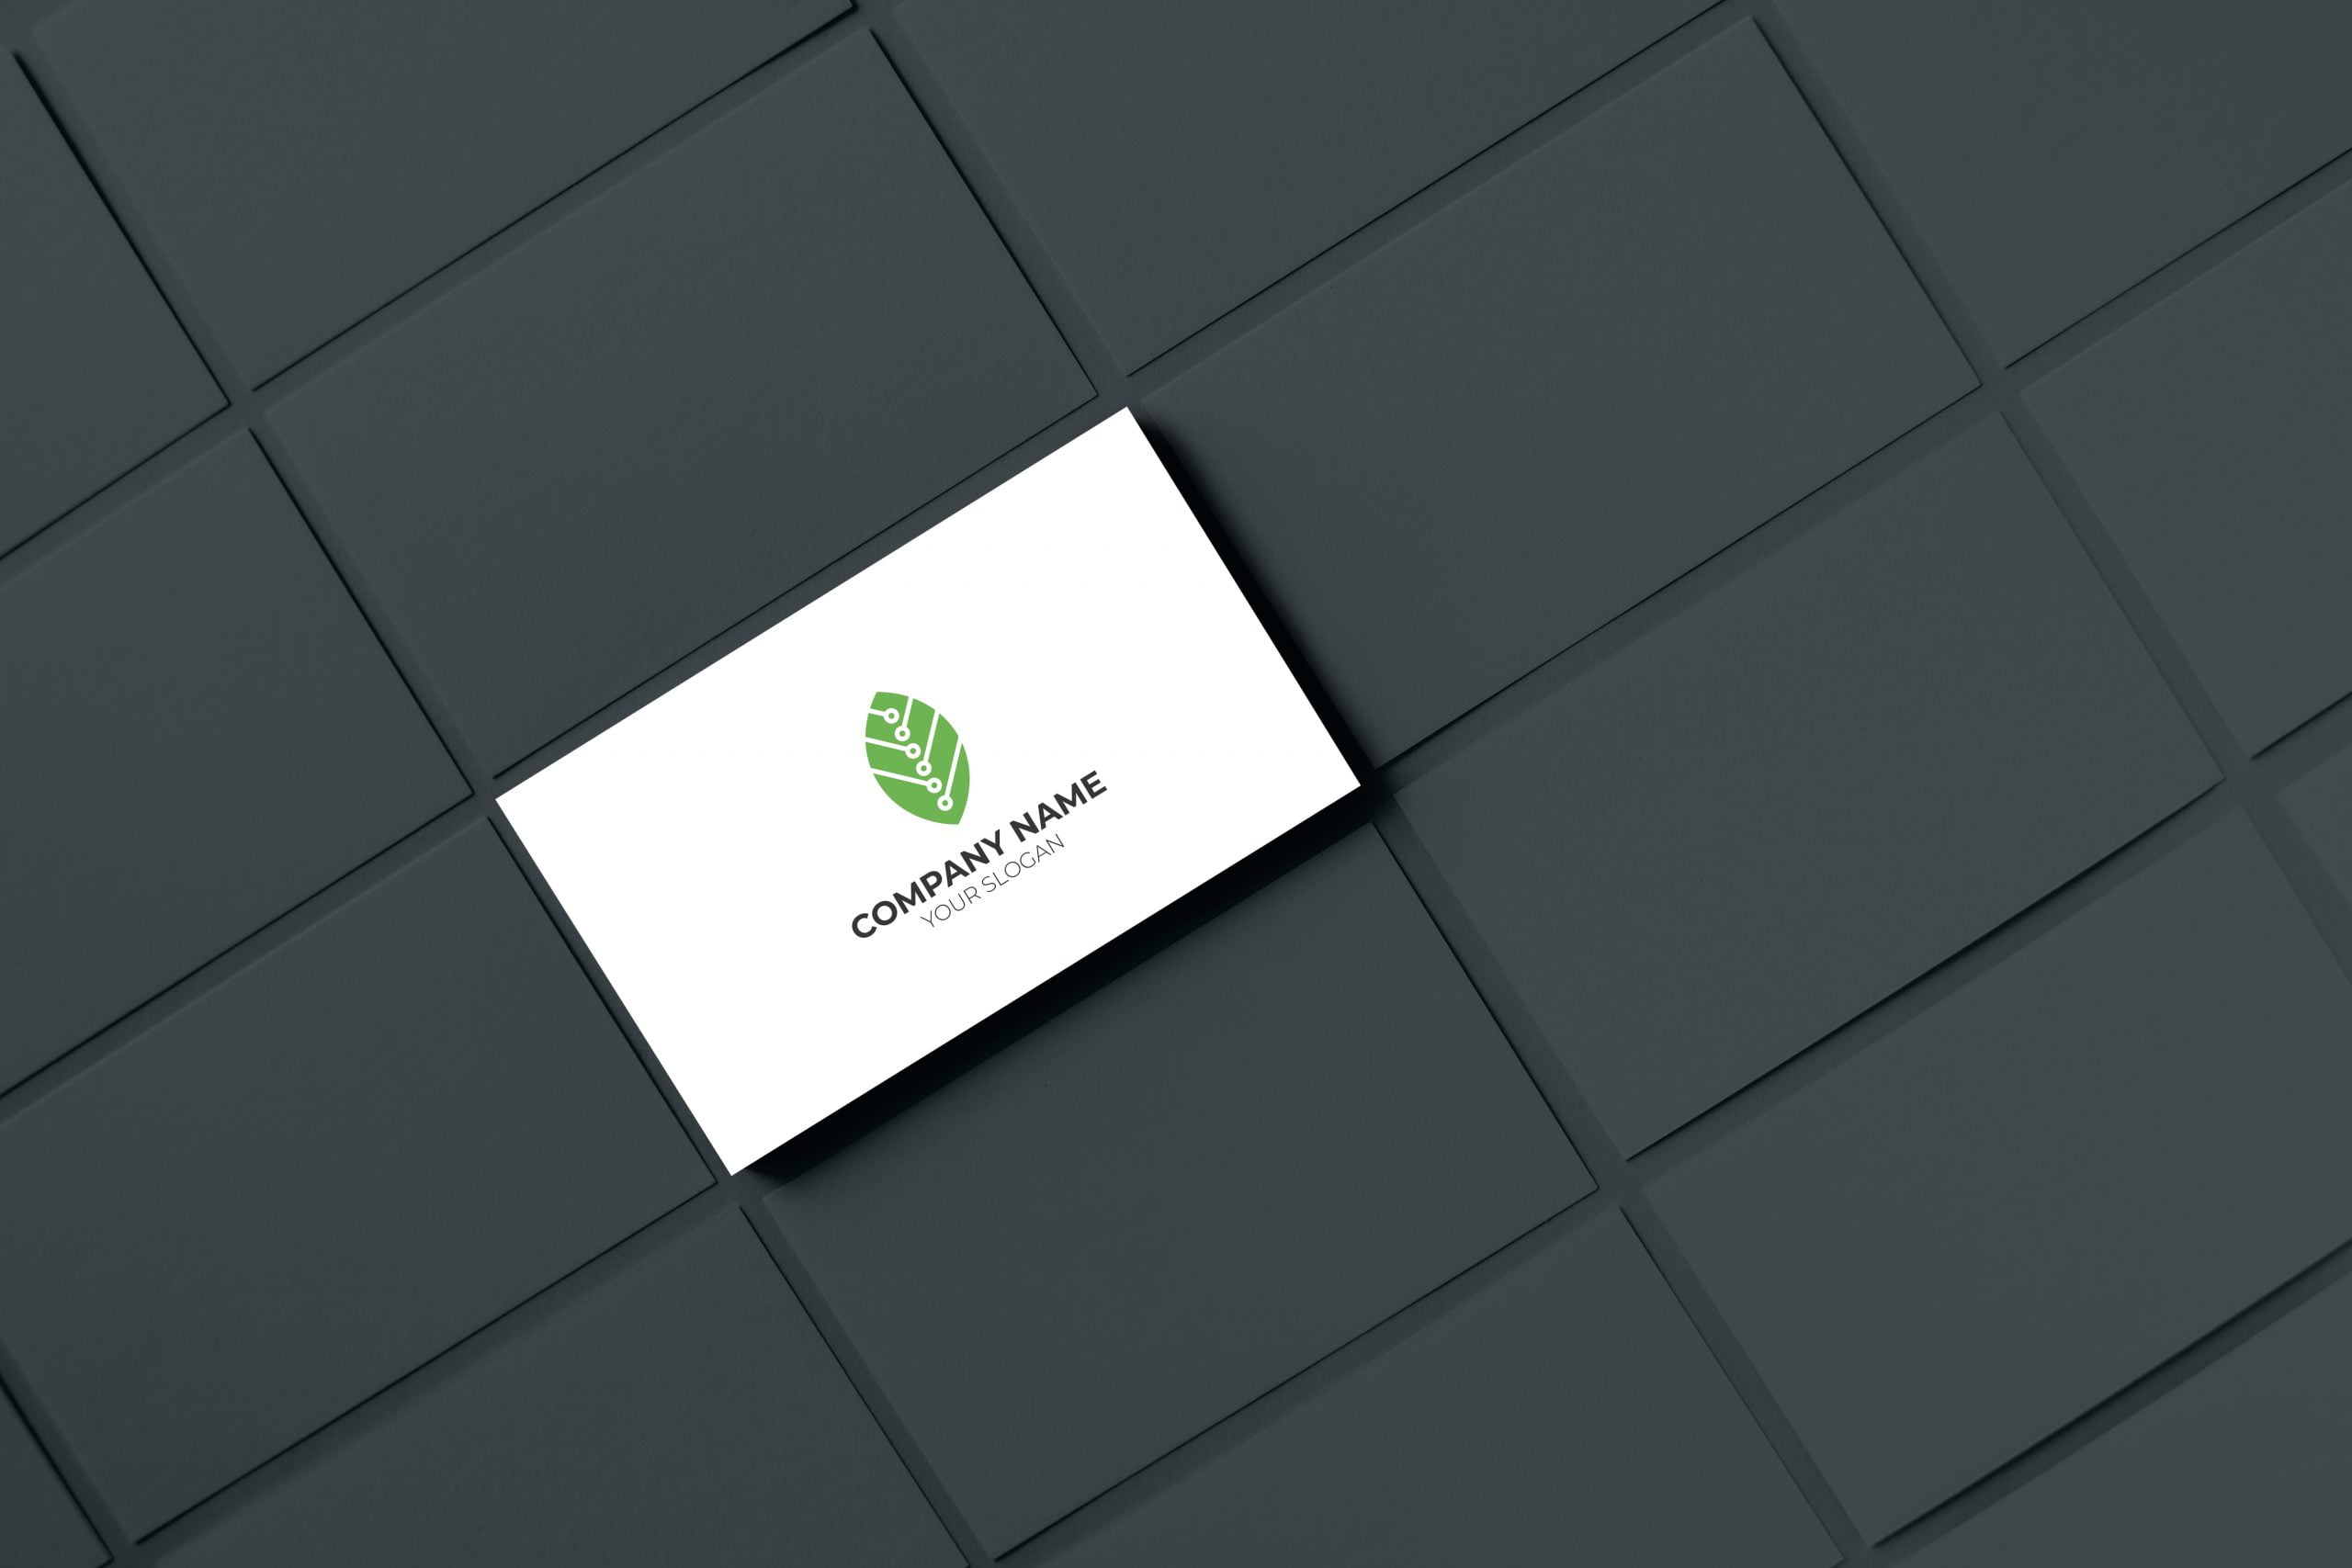 green tech logo on business card presentation